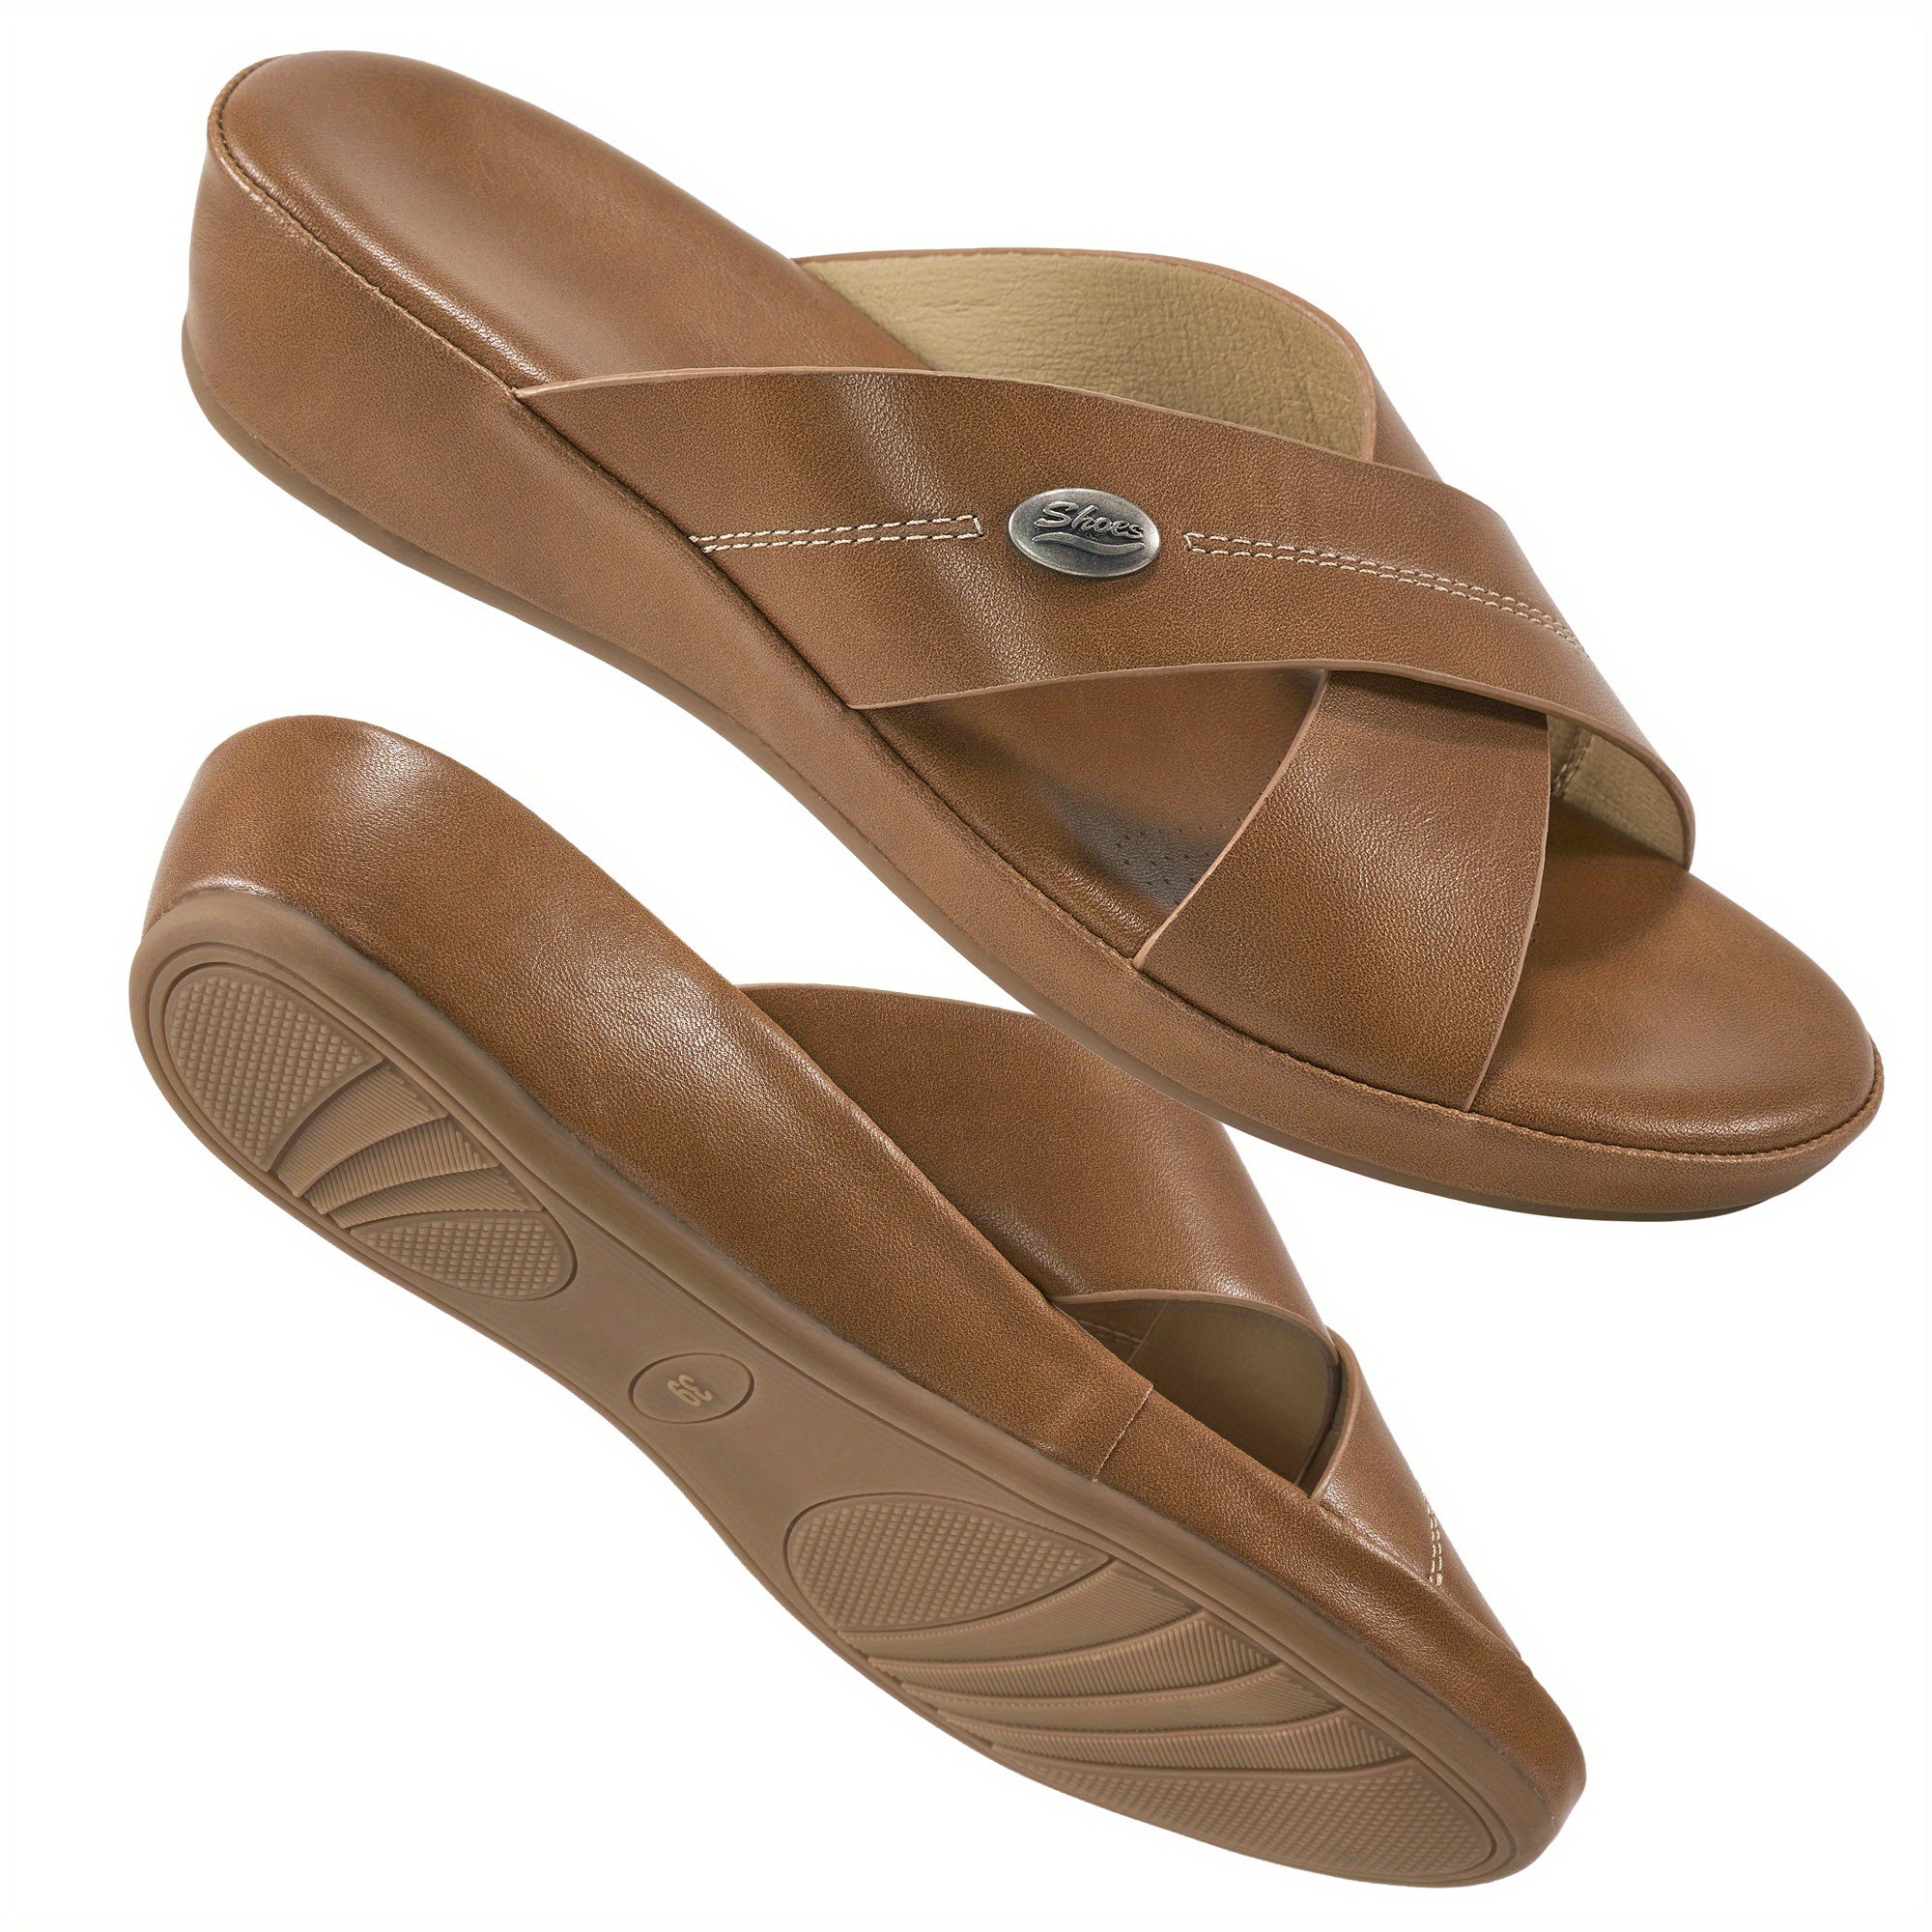 🔥US BEST SELLER🔥Women's Comfortable Orthopedic Leather Flat Sandals